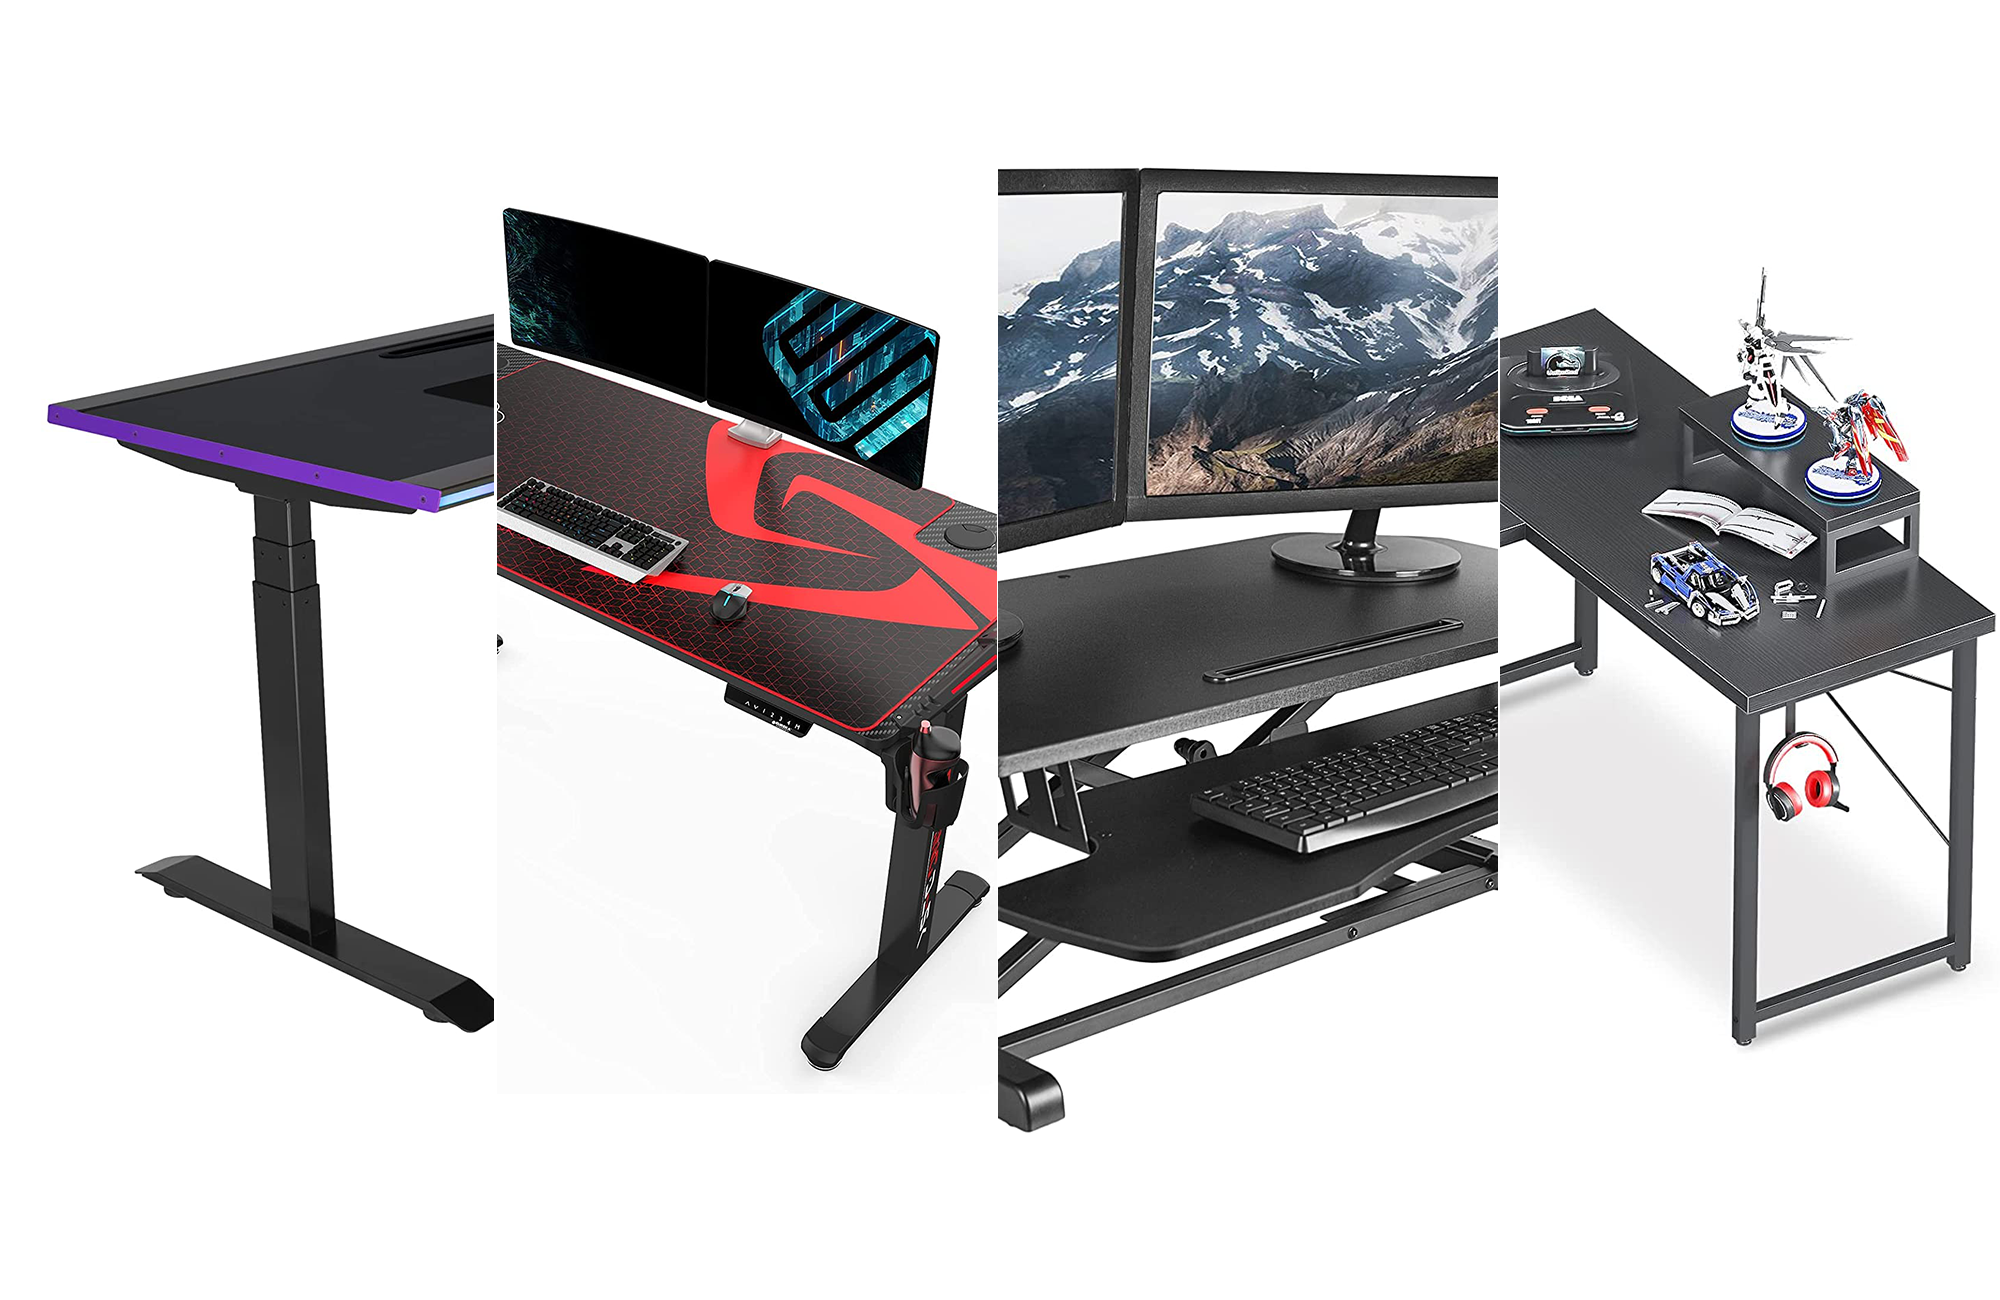 https://www.popsci.com/uploads/2022/05/10/best-gaming-desks.png?auto=webp&width=1440&height=936